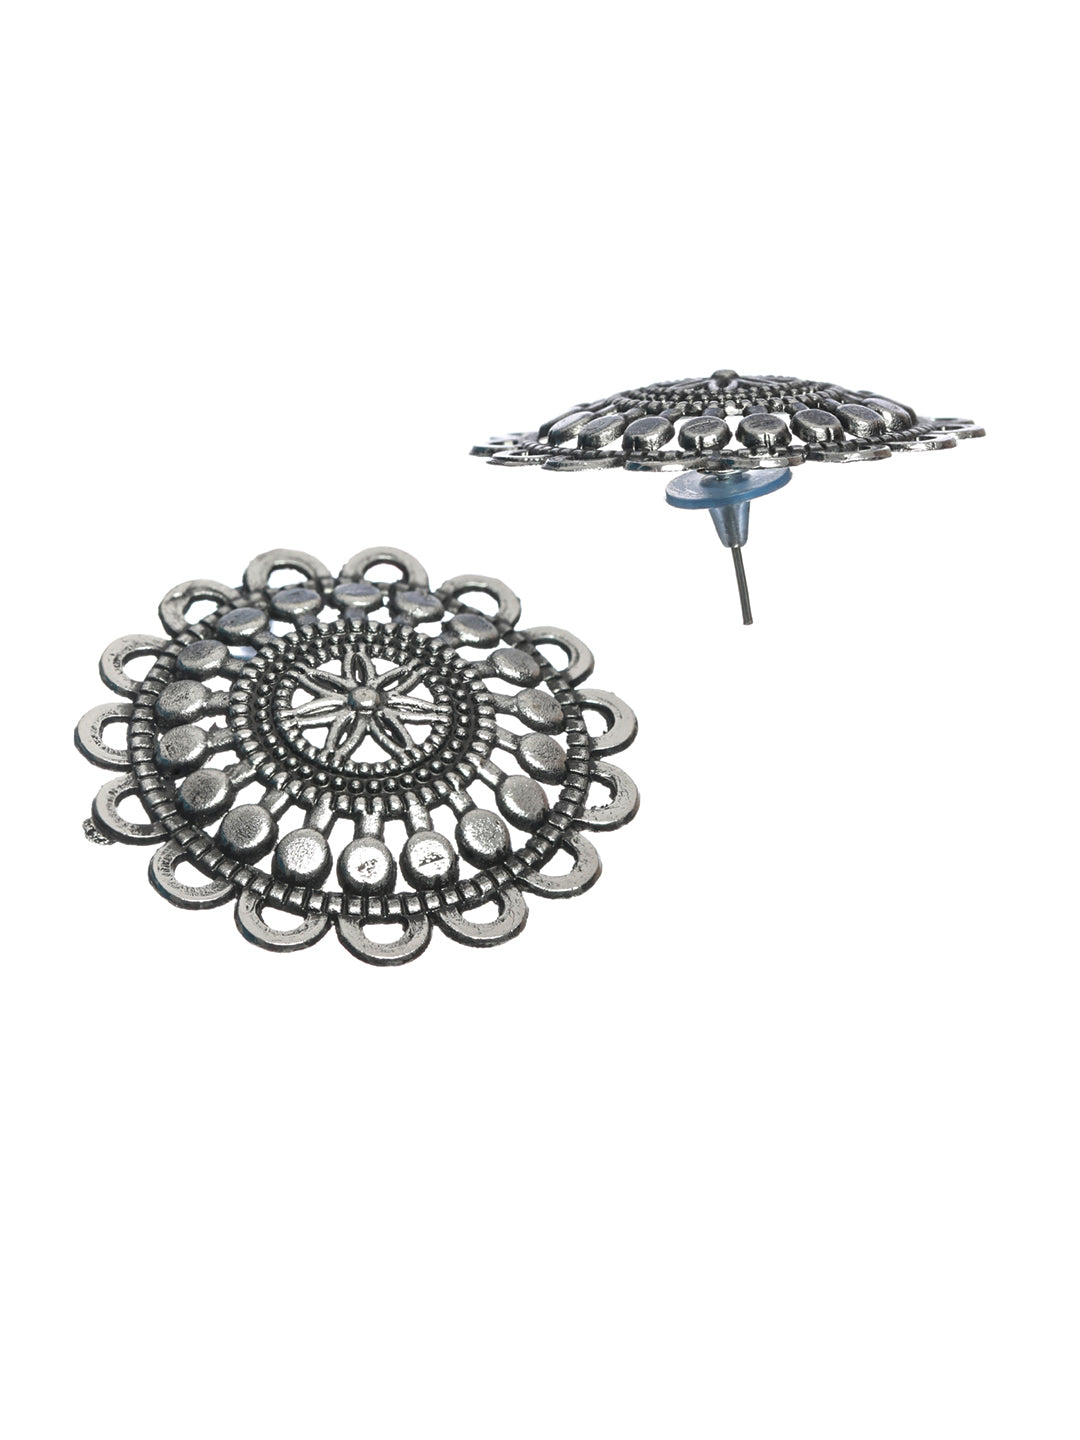 Stylish Floral Motif Oxidised Silver Earring Set - NOZ2TOZ